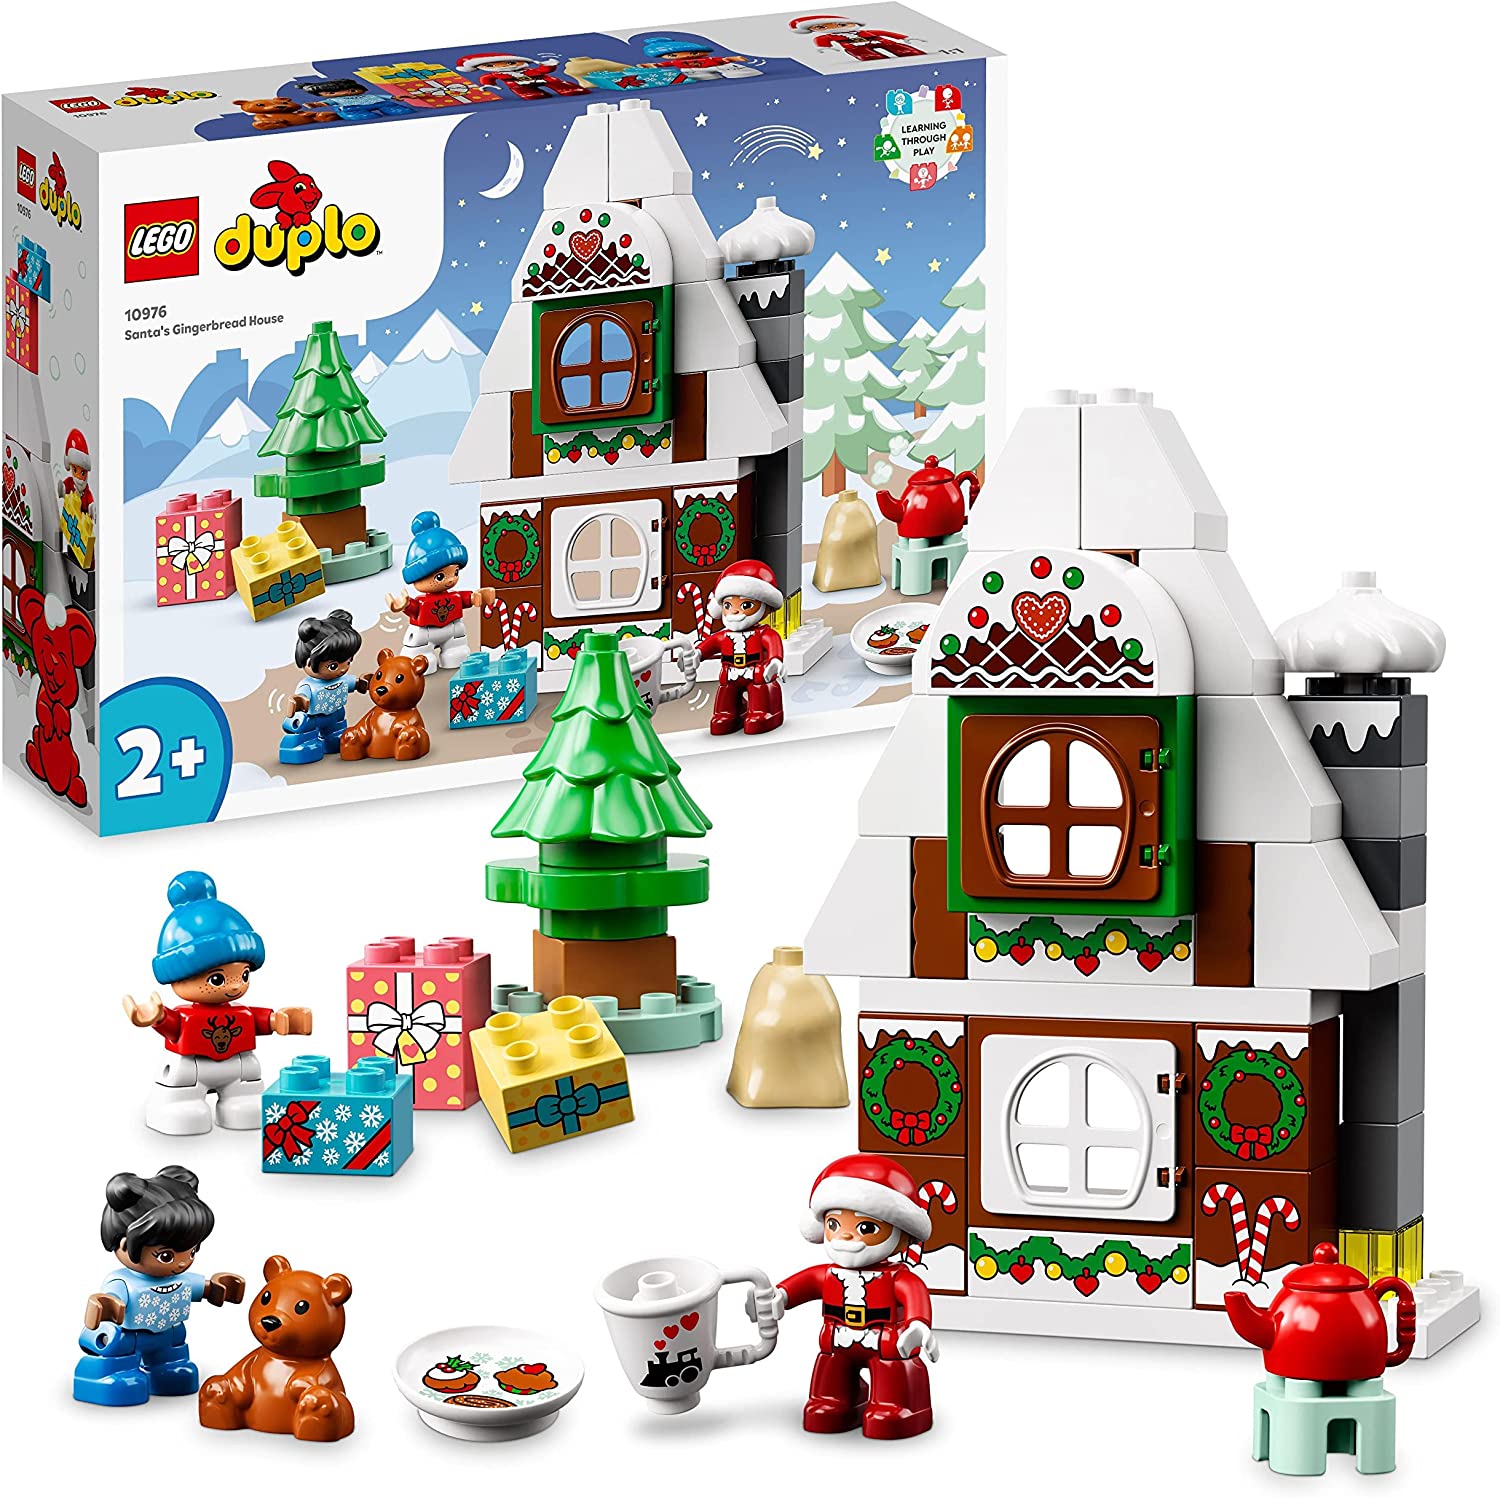 Lego Duplo Santa's Gingerbread House Toy